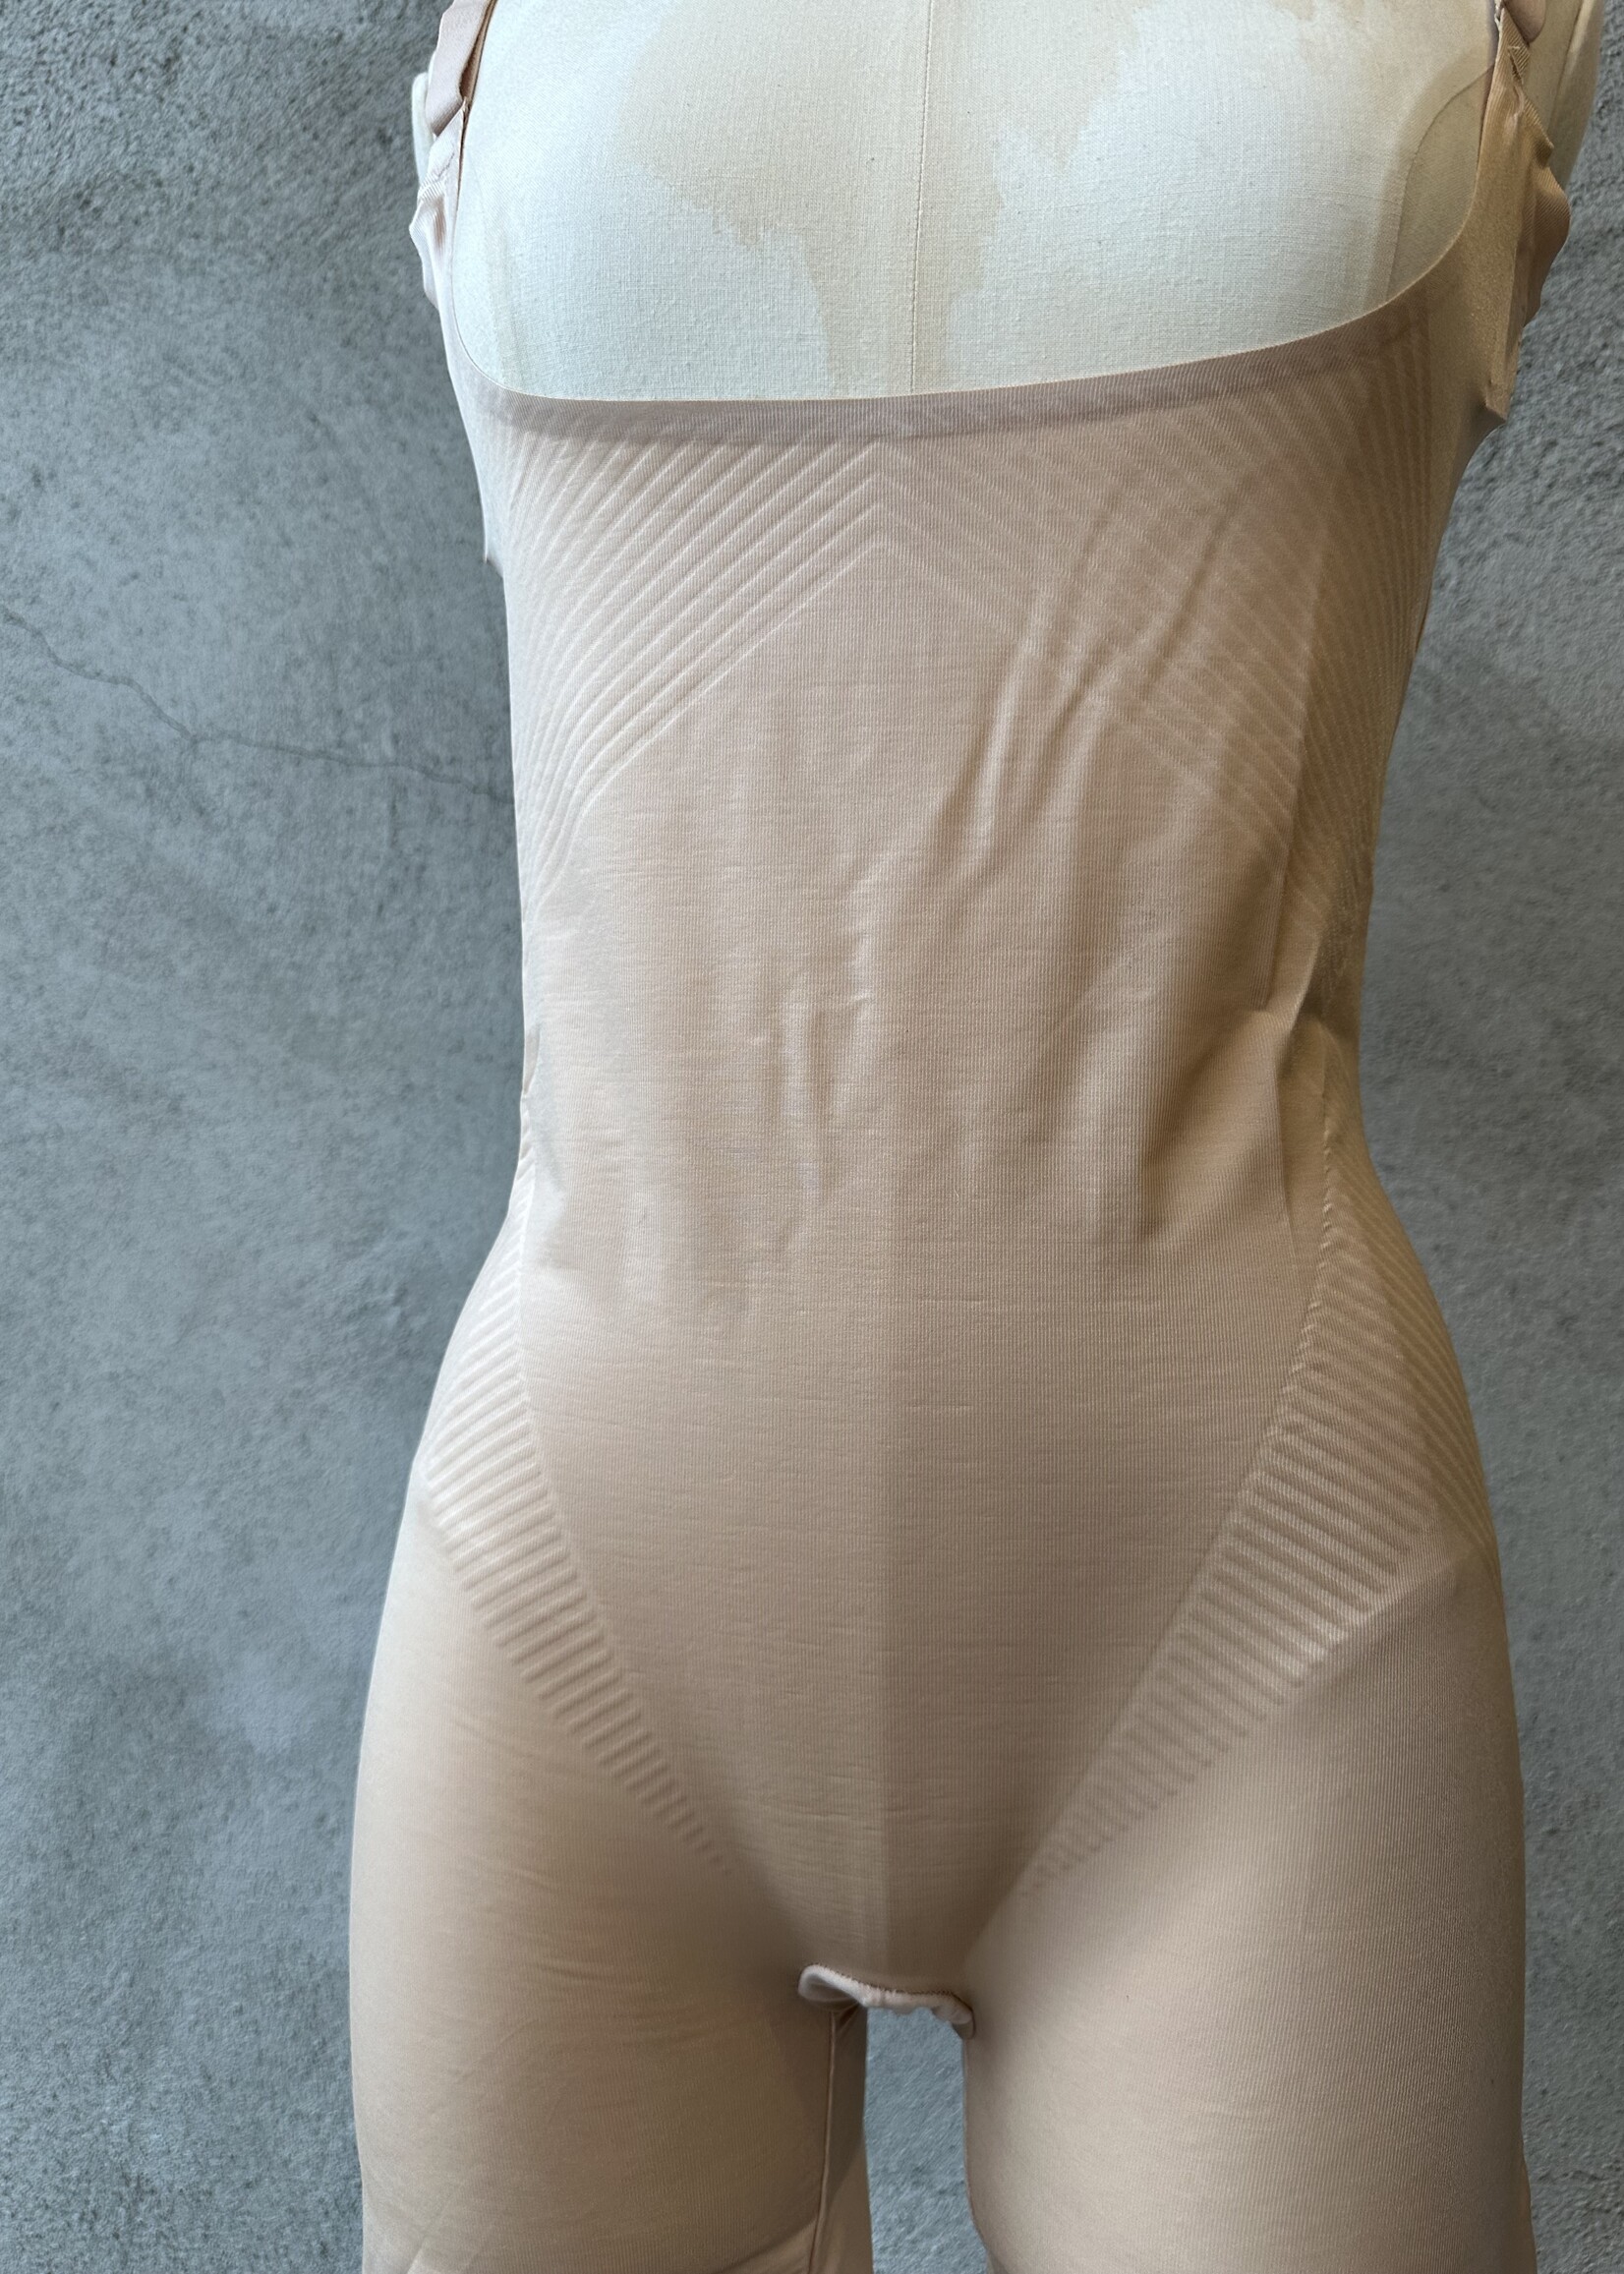 Spanx Open Bust Mid-Thigh Bodysuit